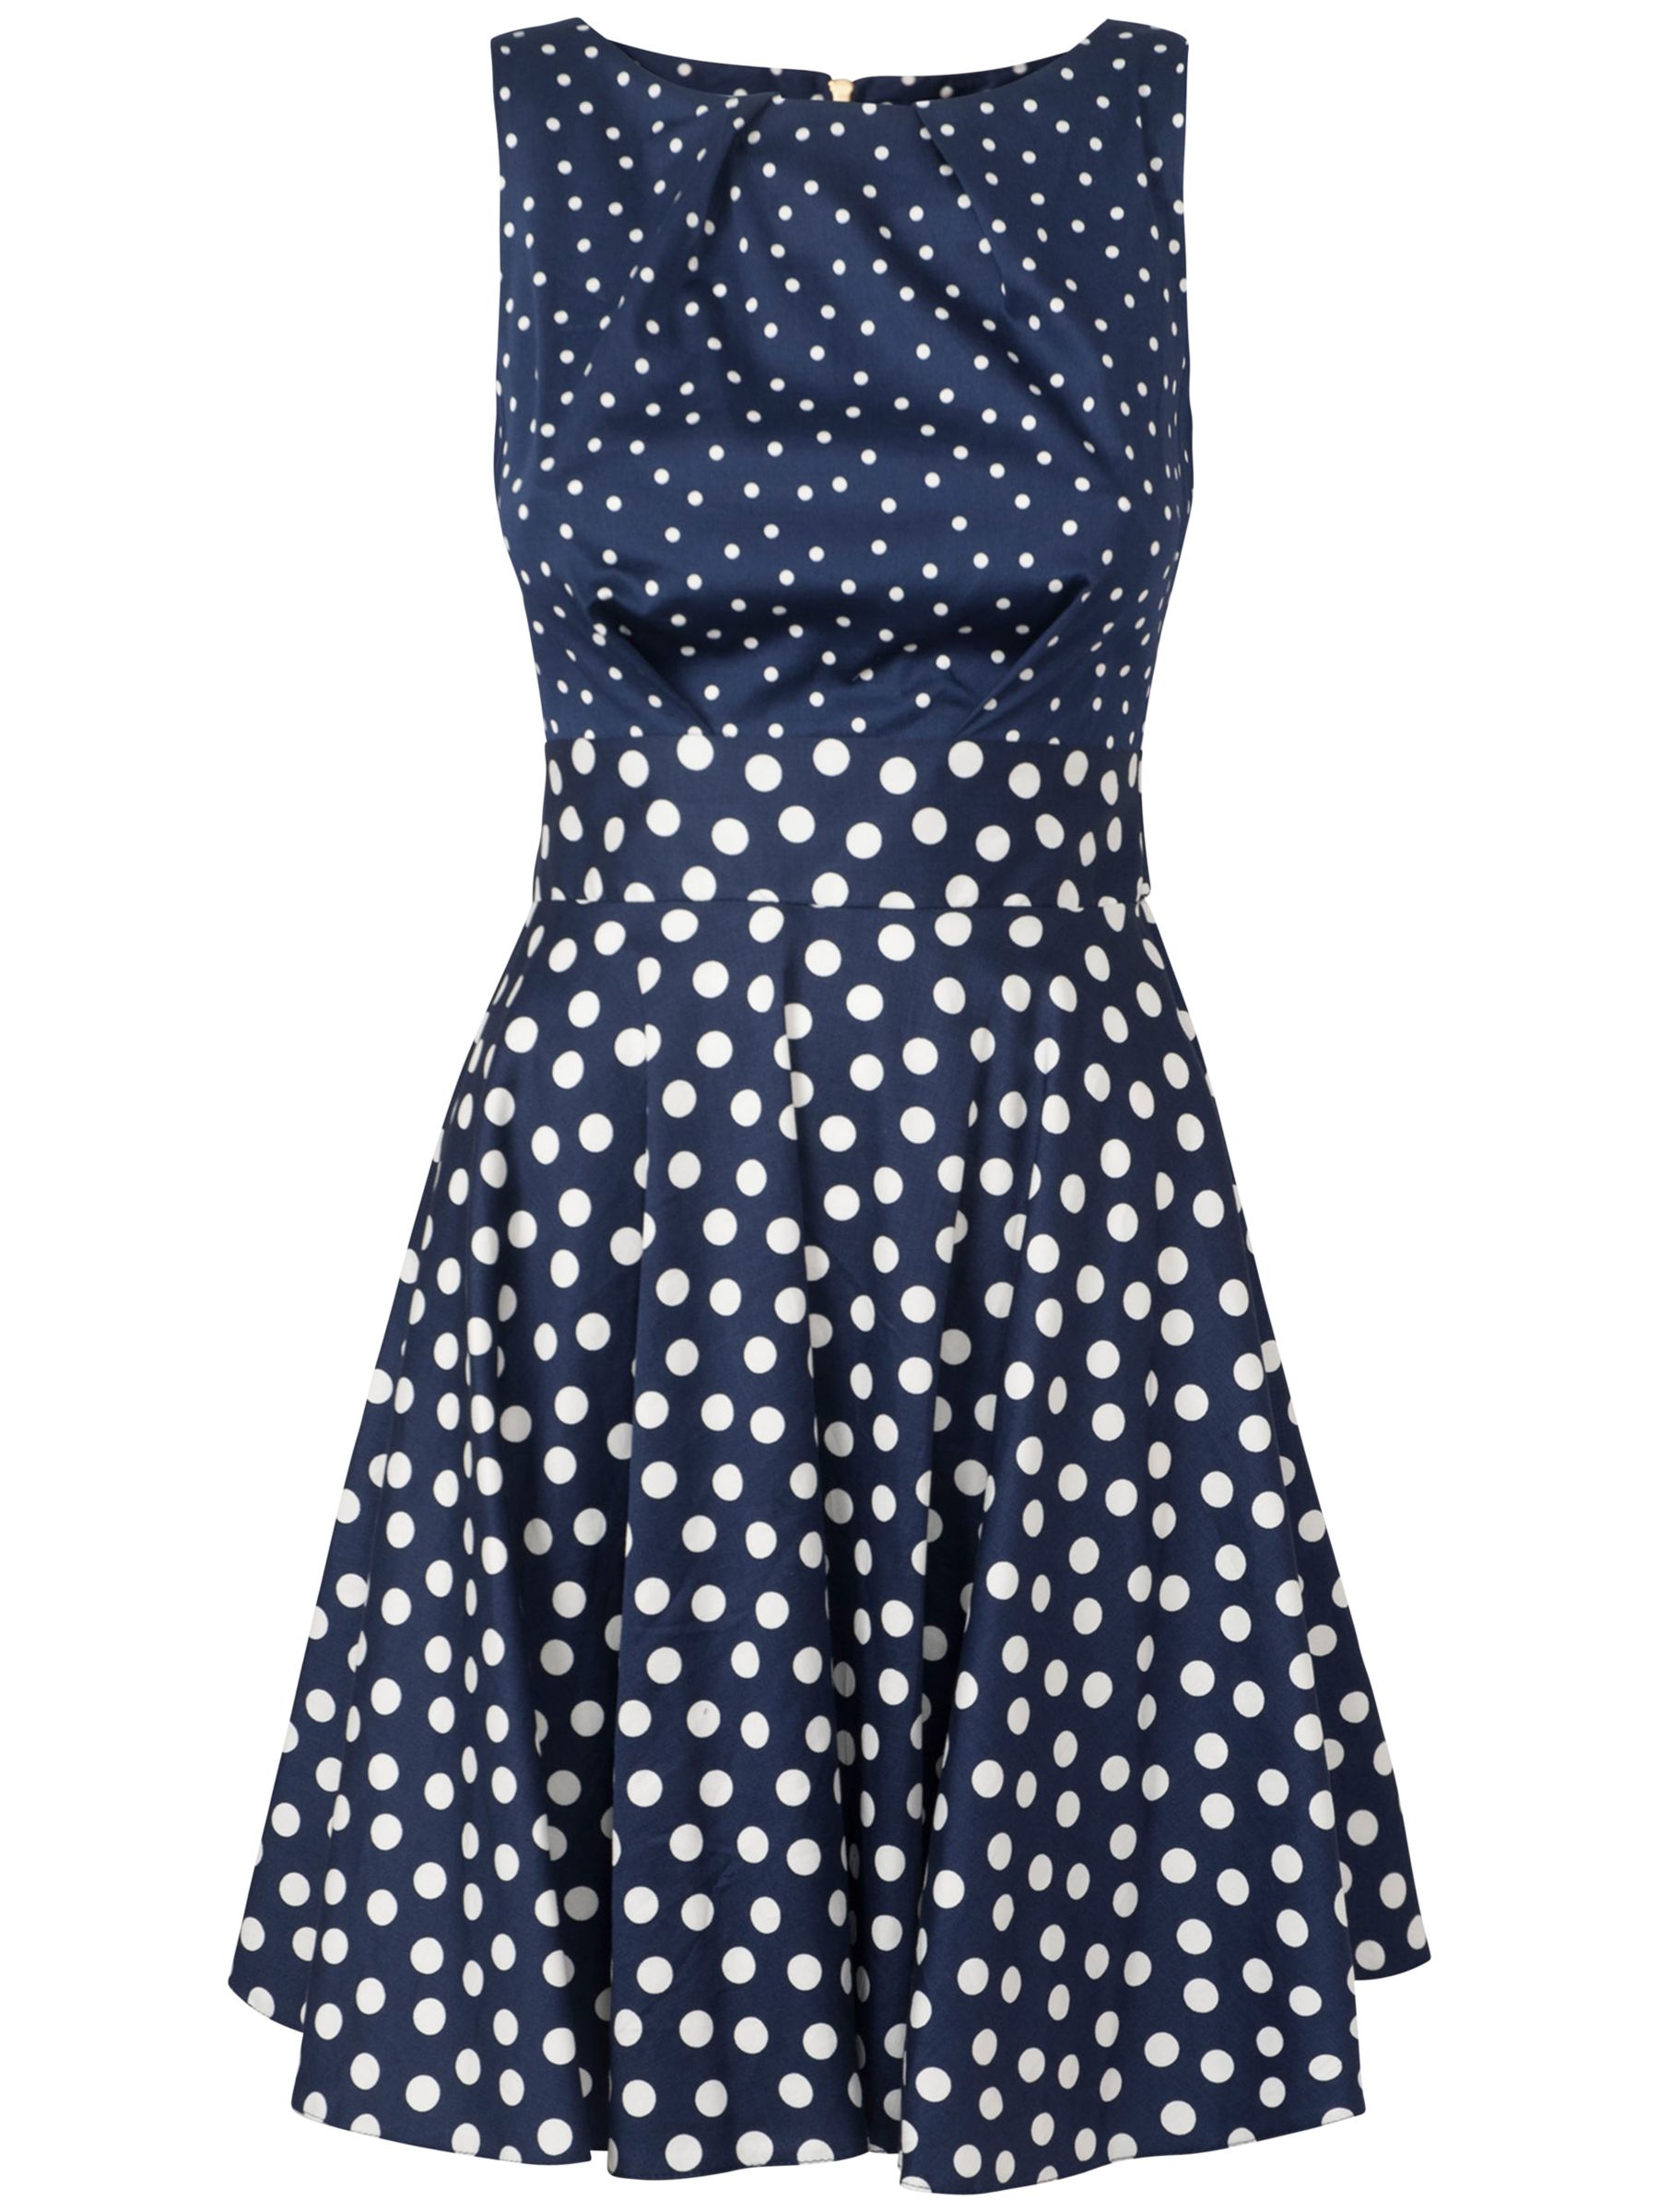 Closet Contrast Polka Dot Dress, Blue/White at John Lewis & Partners